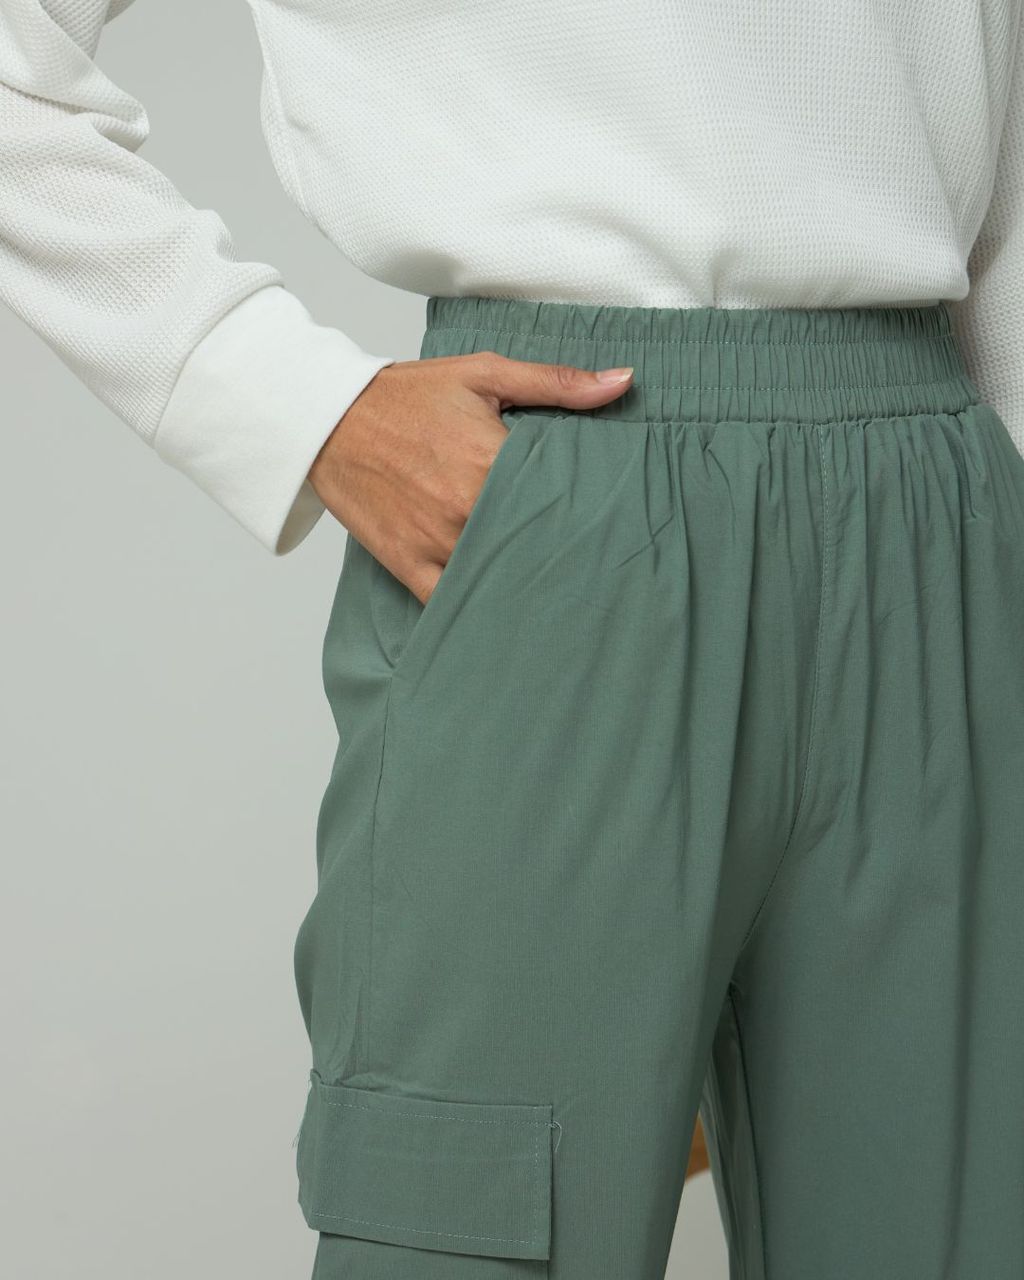 haura-wear-dixie-mix-cotton-skirt-high-waist-cotton-long-pants-seluar-muslimah-seluar-perempuan-palazzo-pants-sluar-skirt (5)